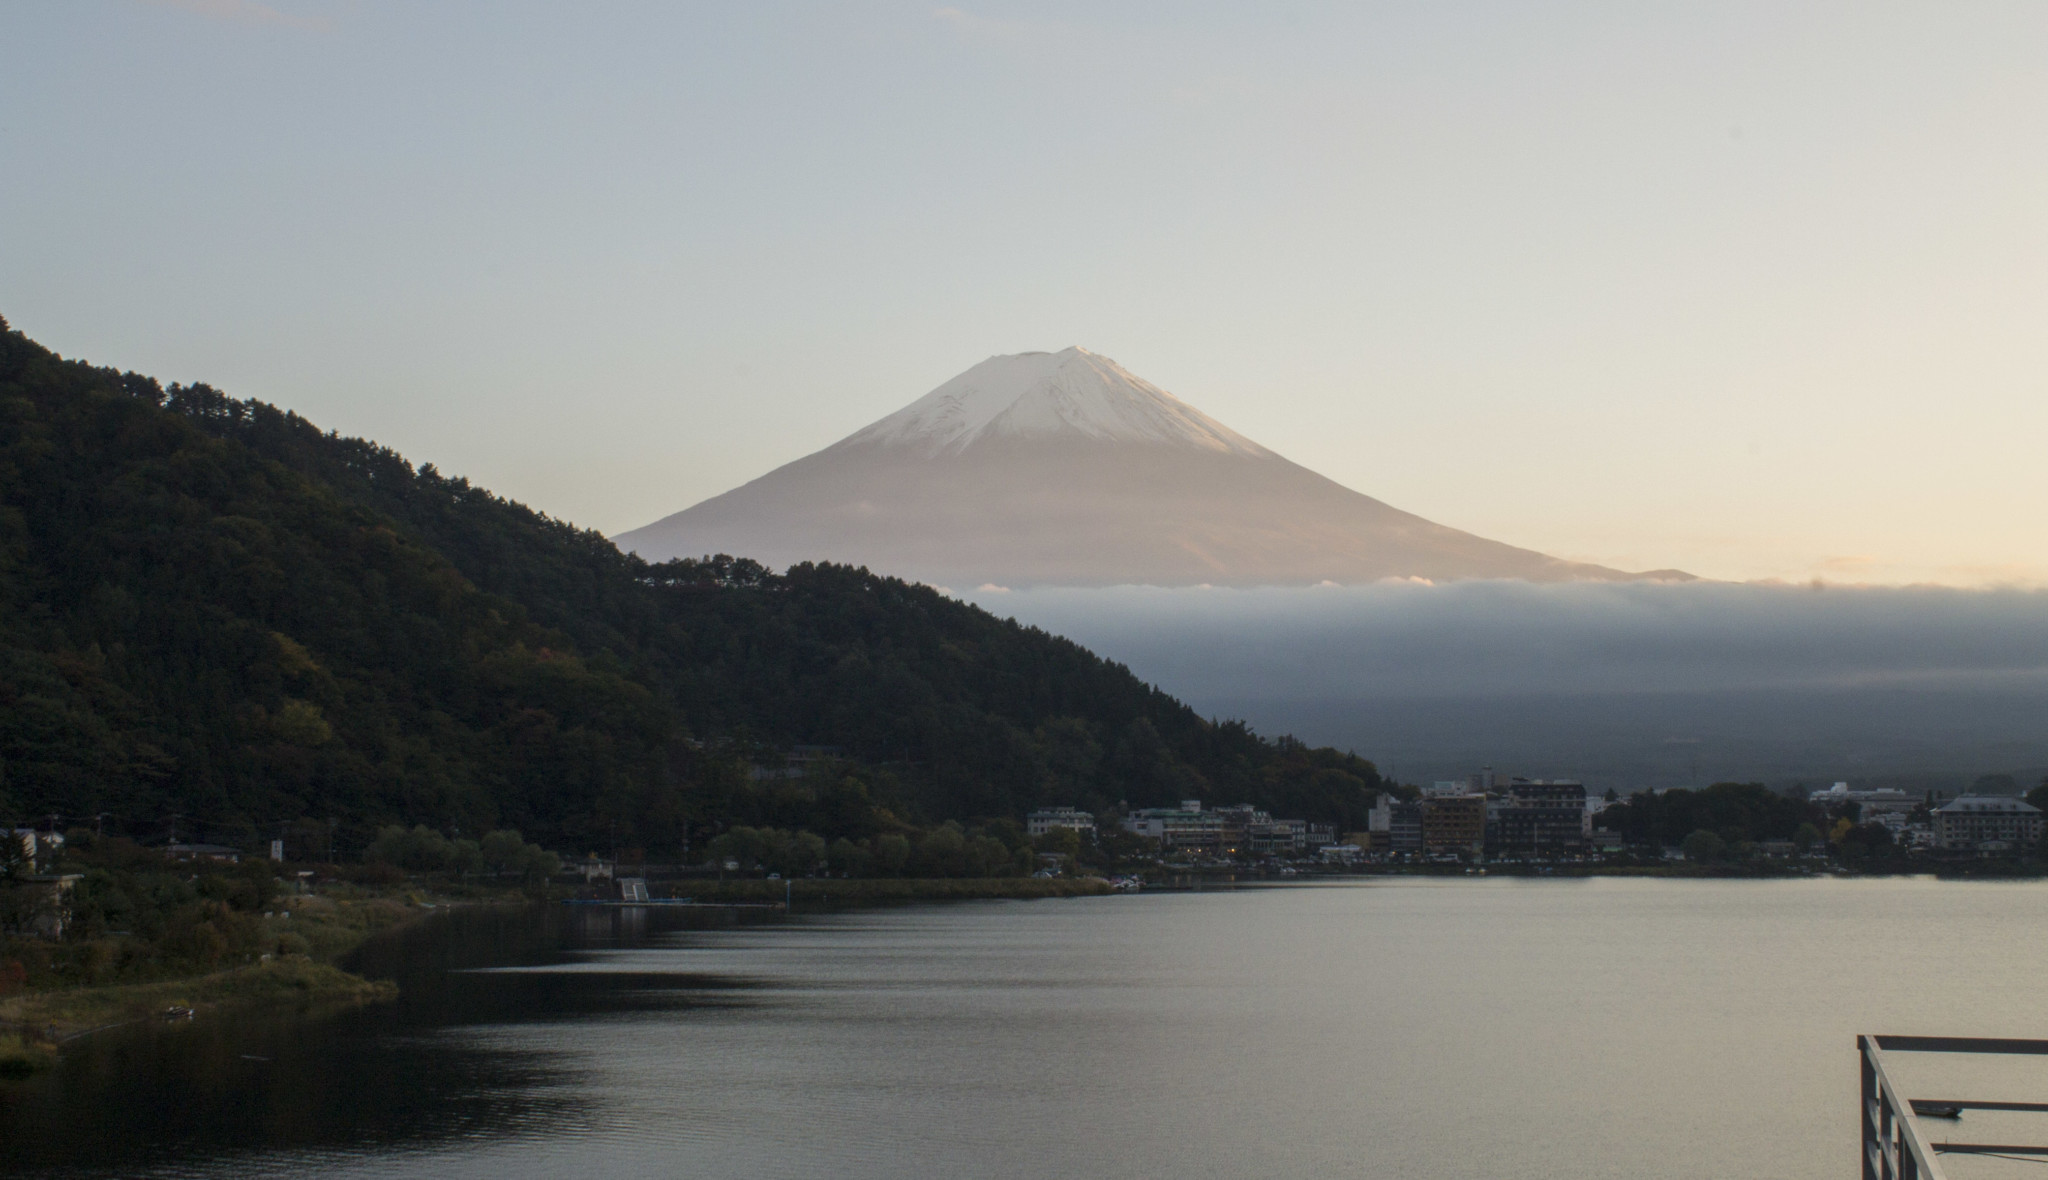 Driving around the Fuji Five Lakes